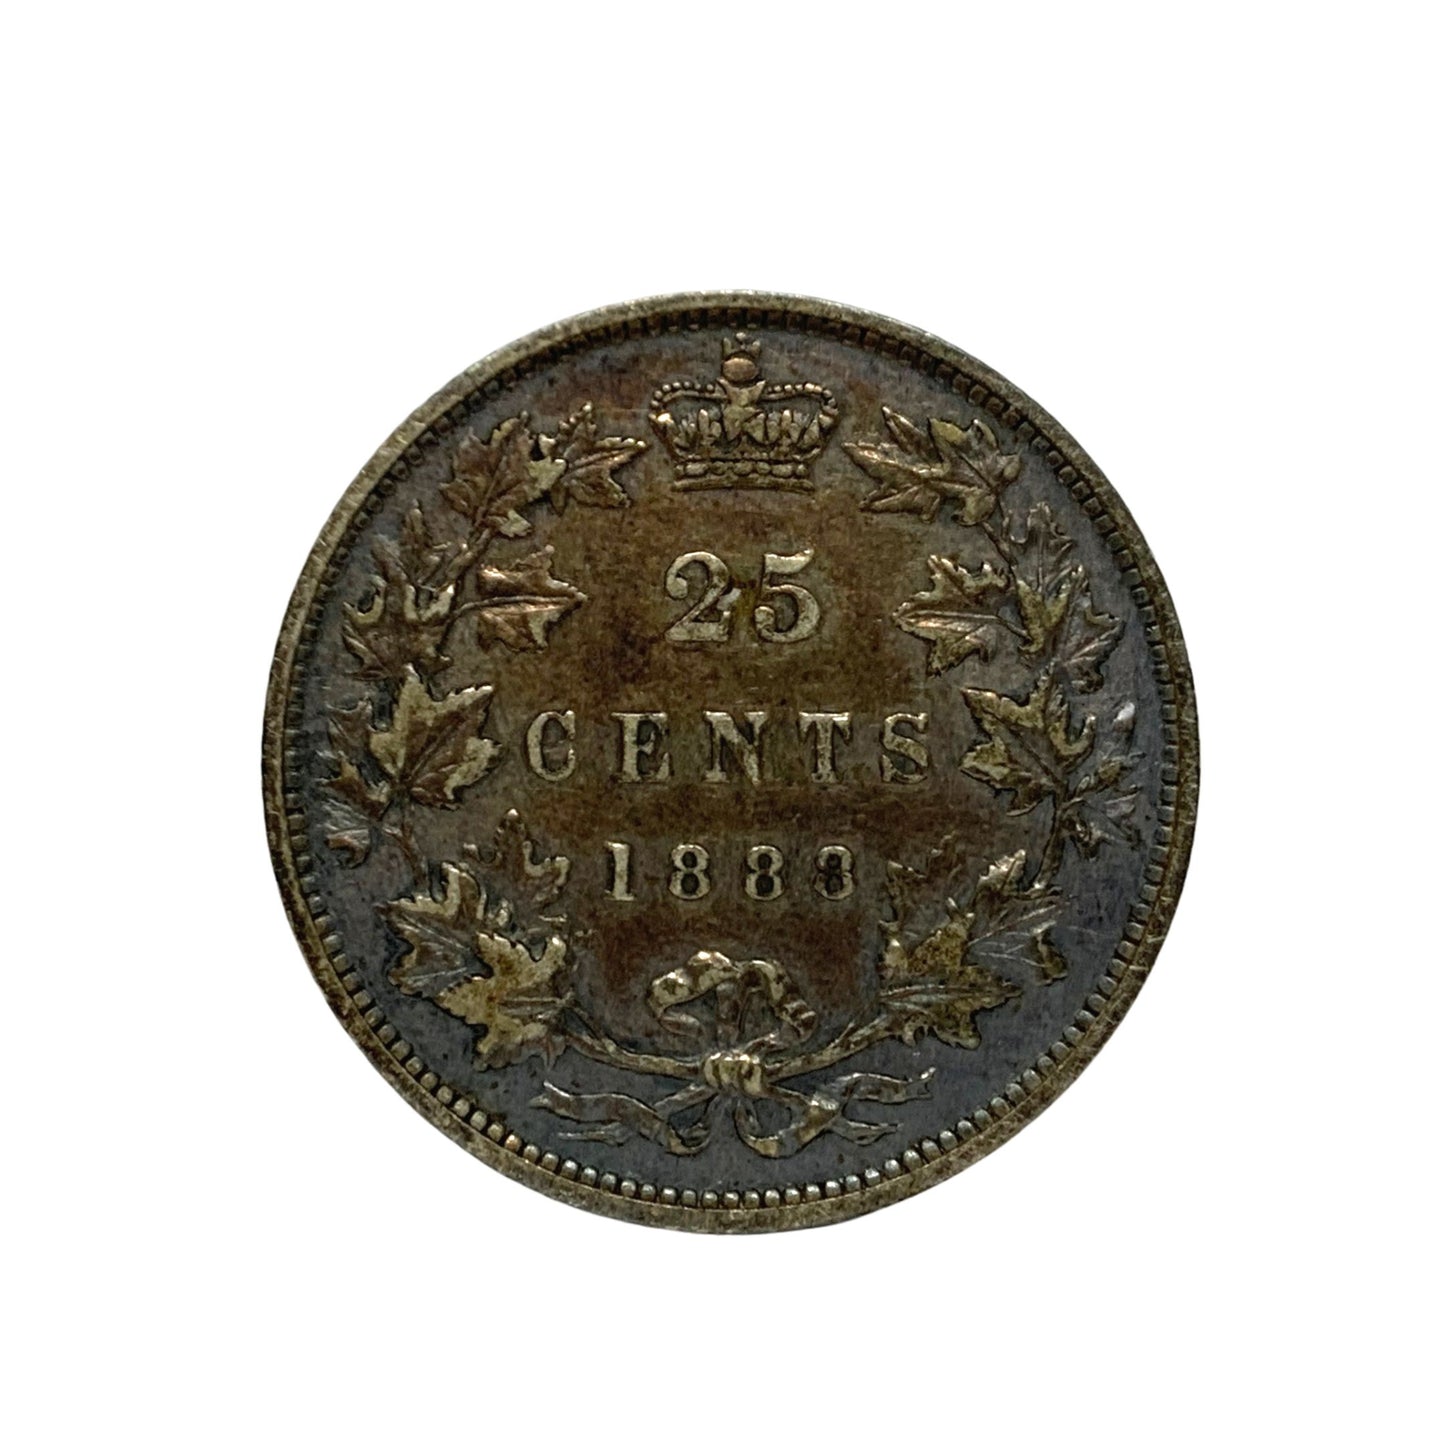 1888 Canada 25C Wide 8